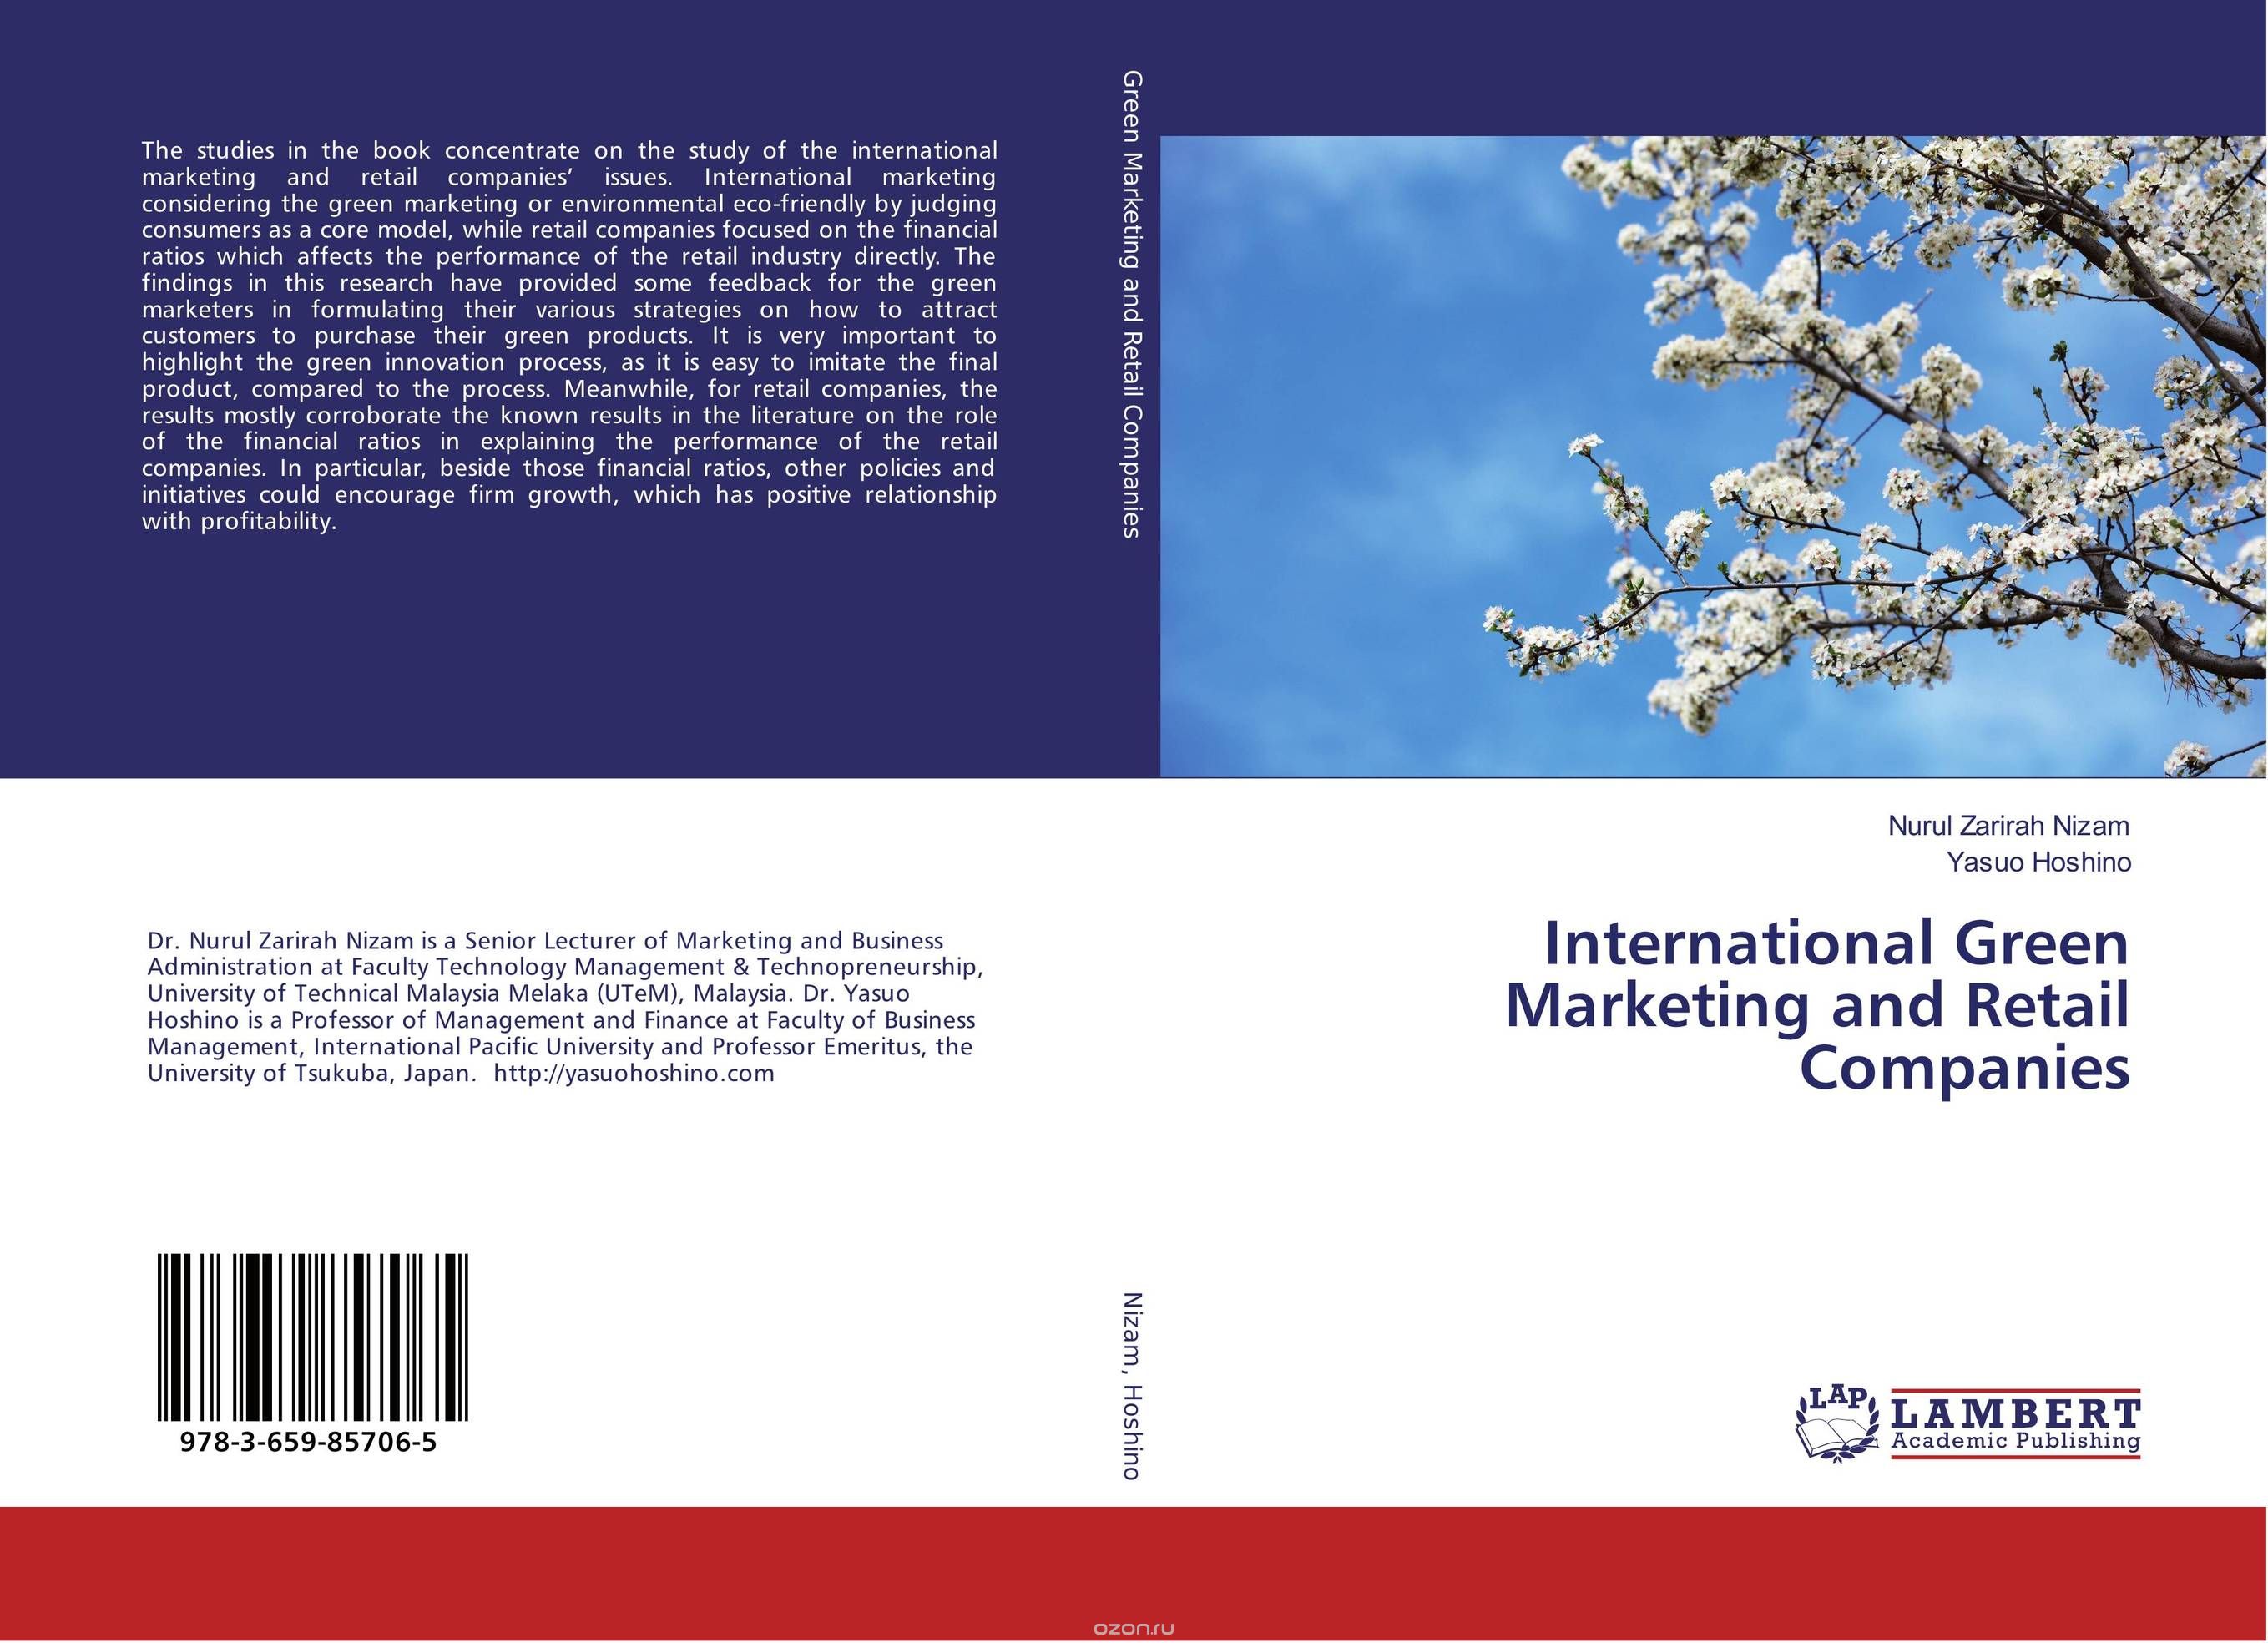 International Green Marketing and Retail Companies